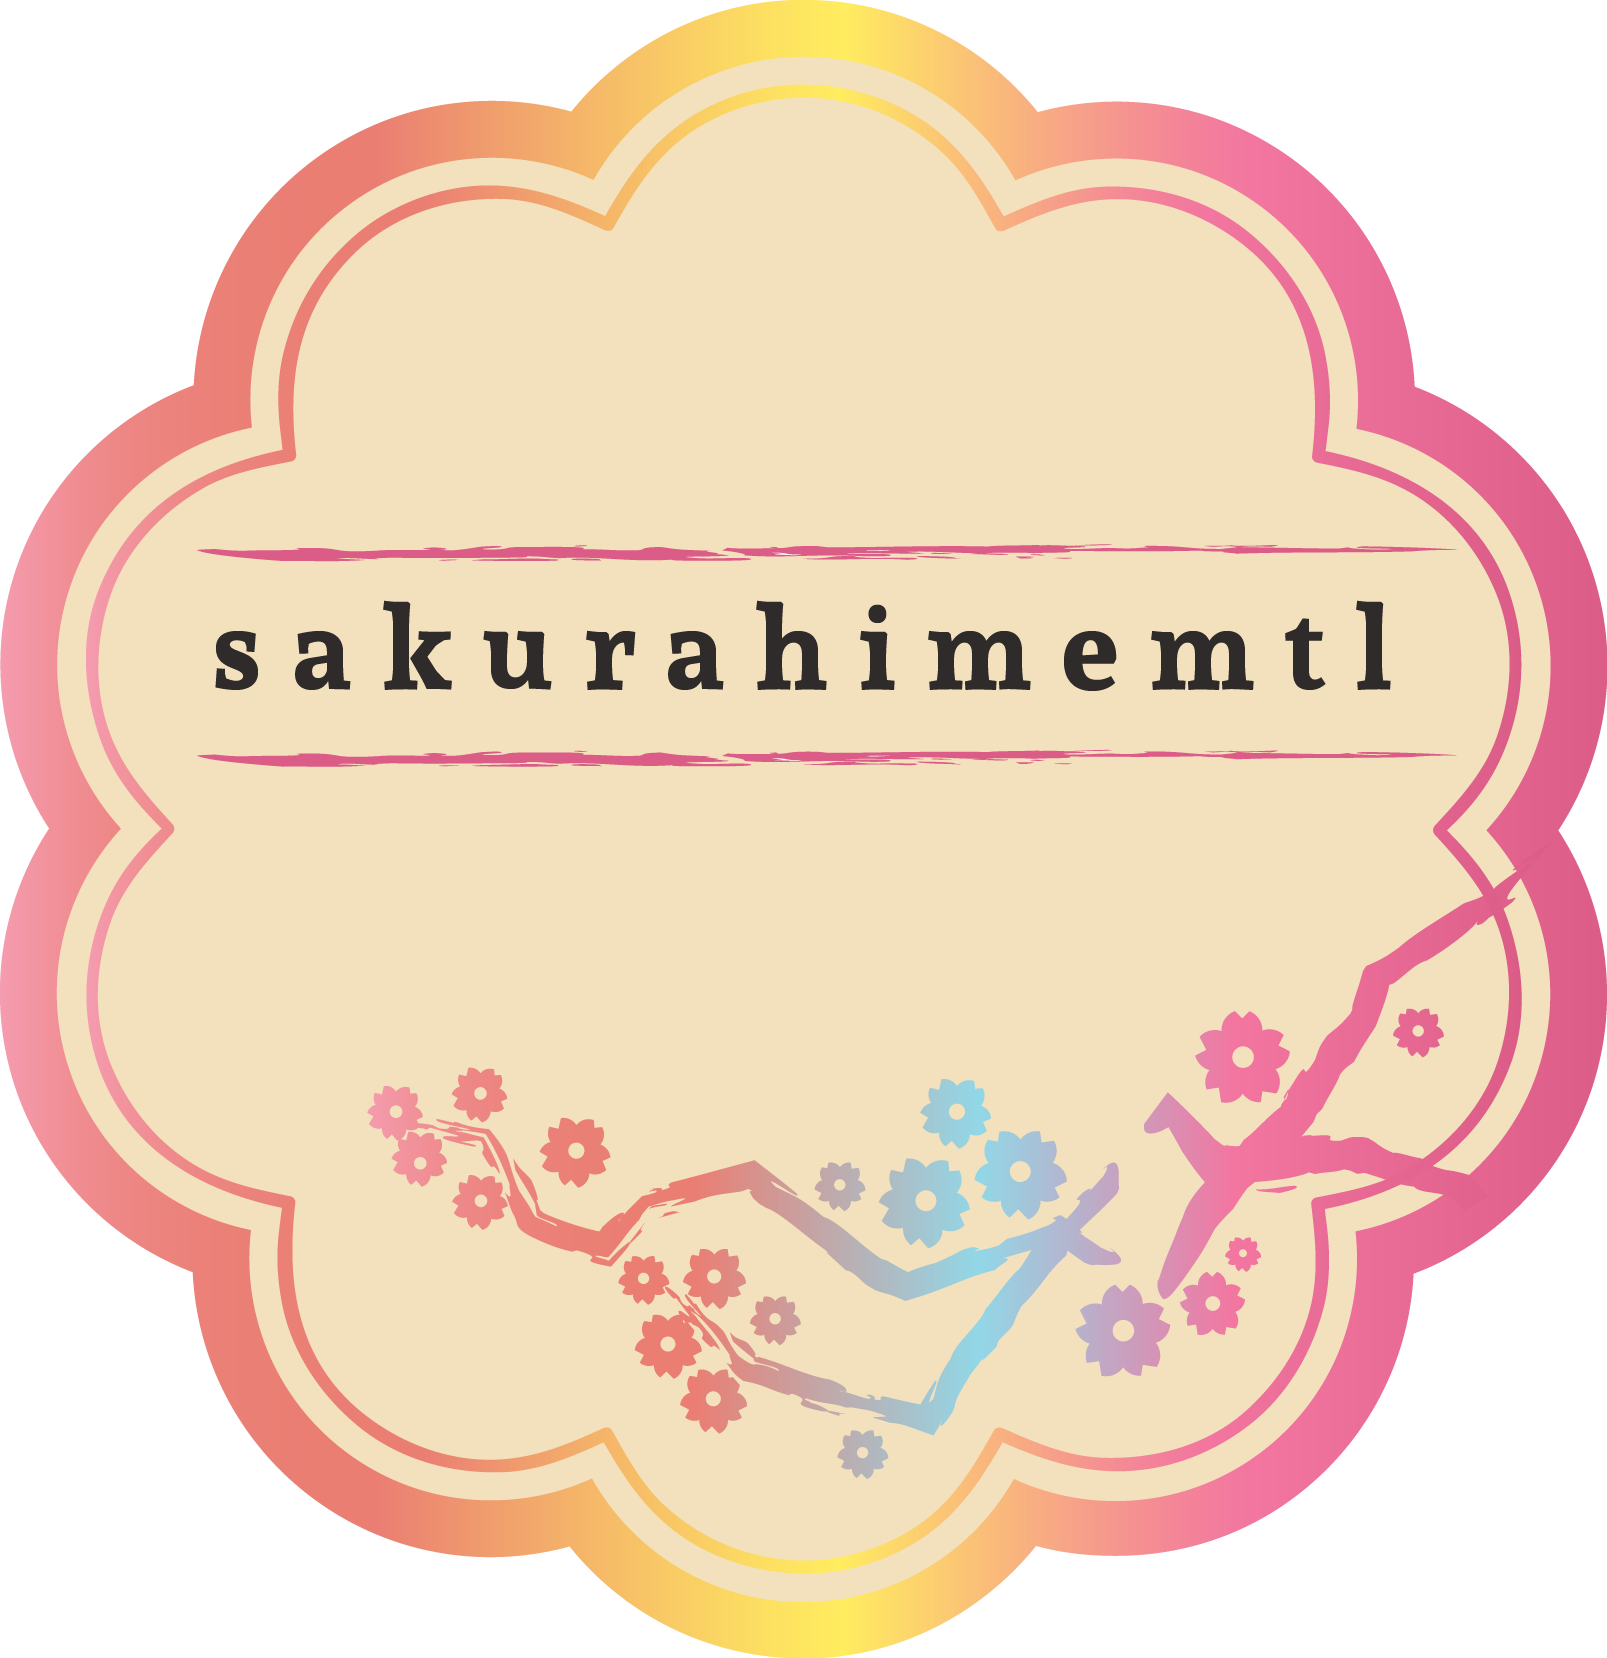 Sakurahime Translation